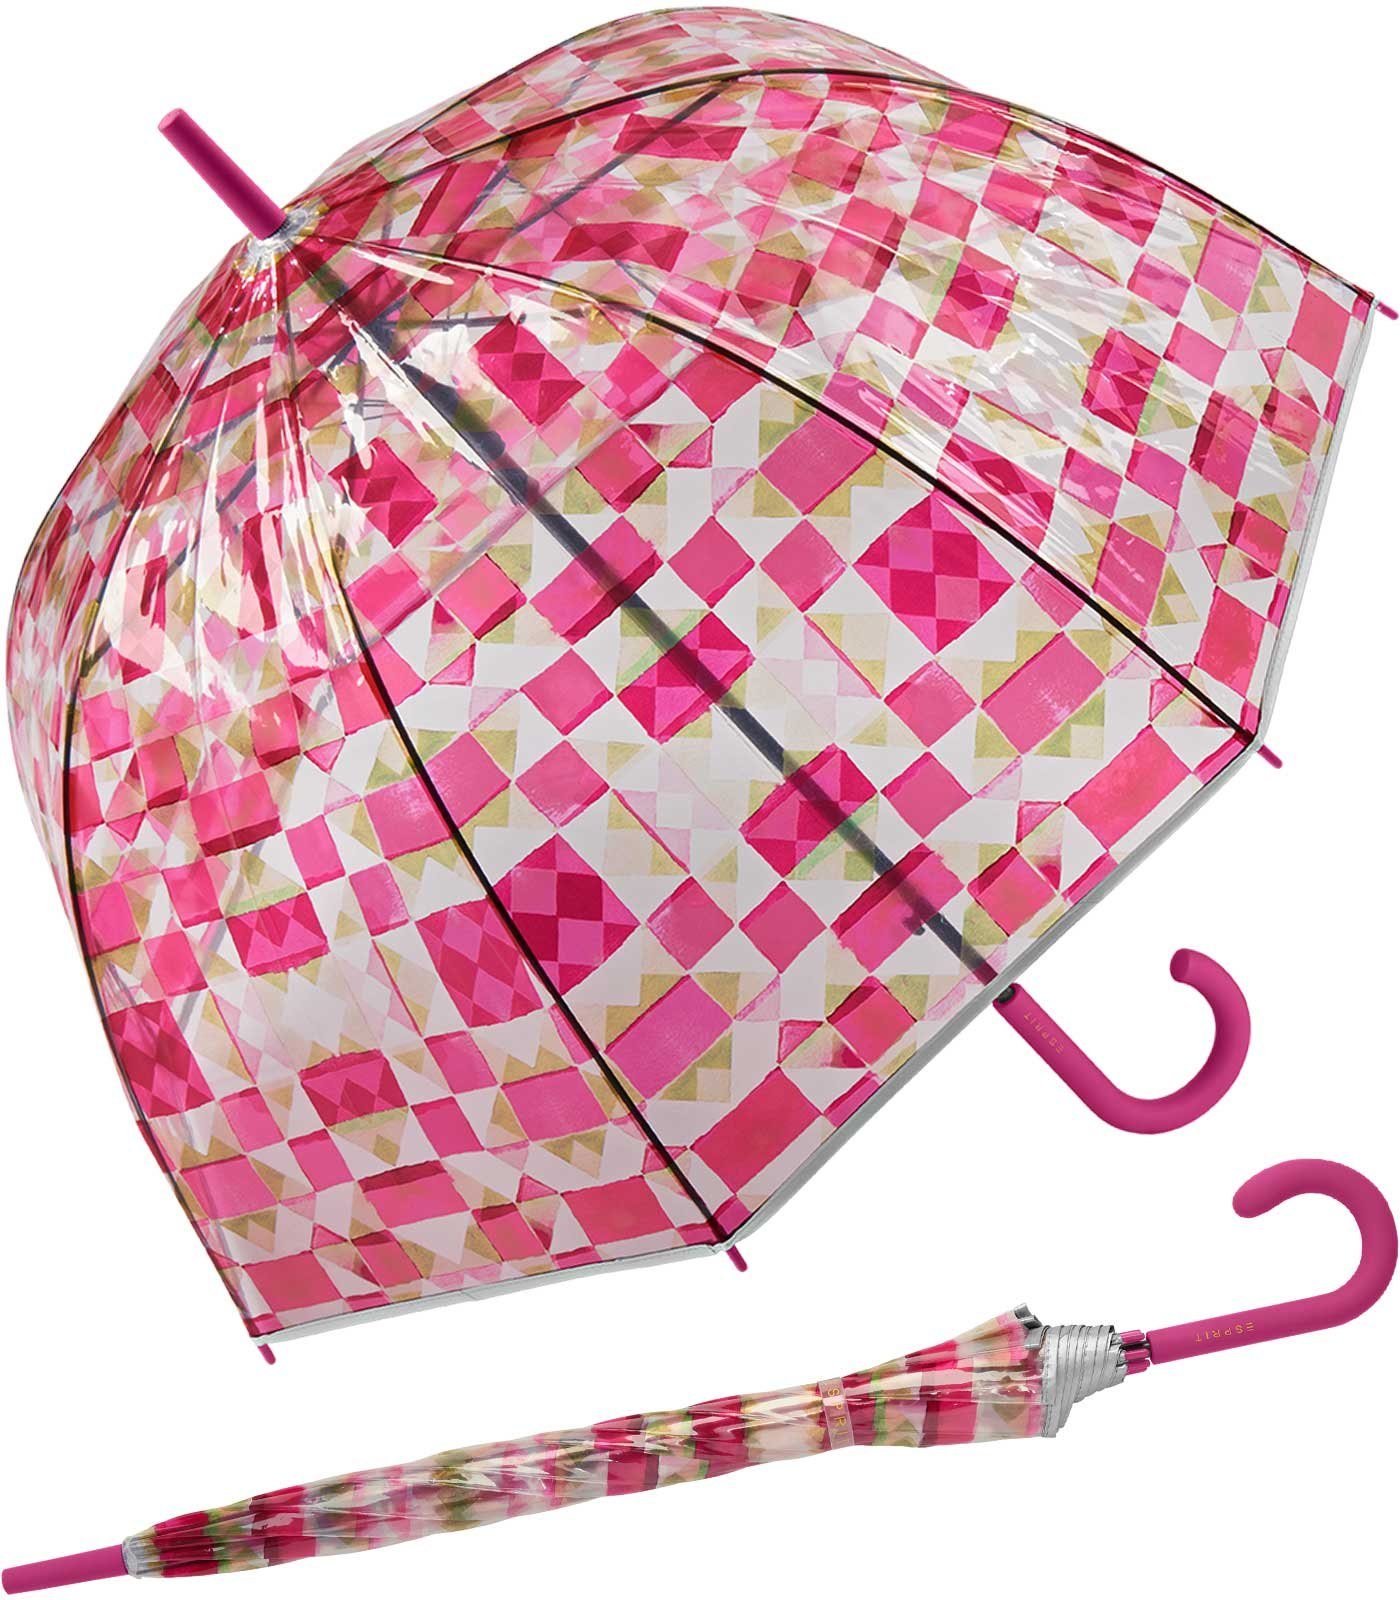 pinkfarbenen Esprit bedruckt farbenfroh mit Vierecken transparent, Langregenschirm Kaleidoscope Automatik-Glockenschirm